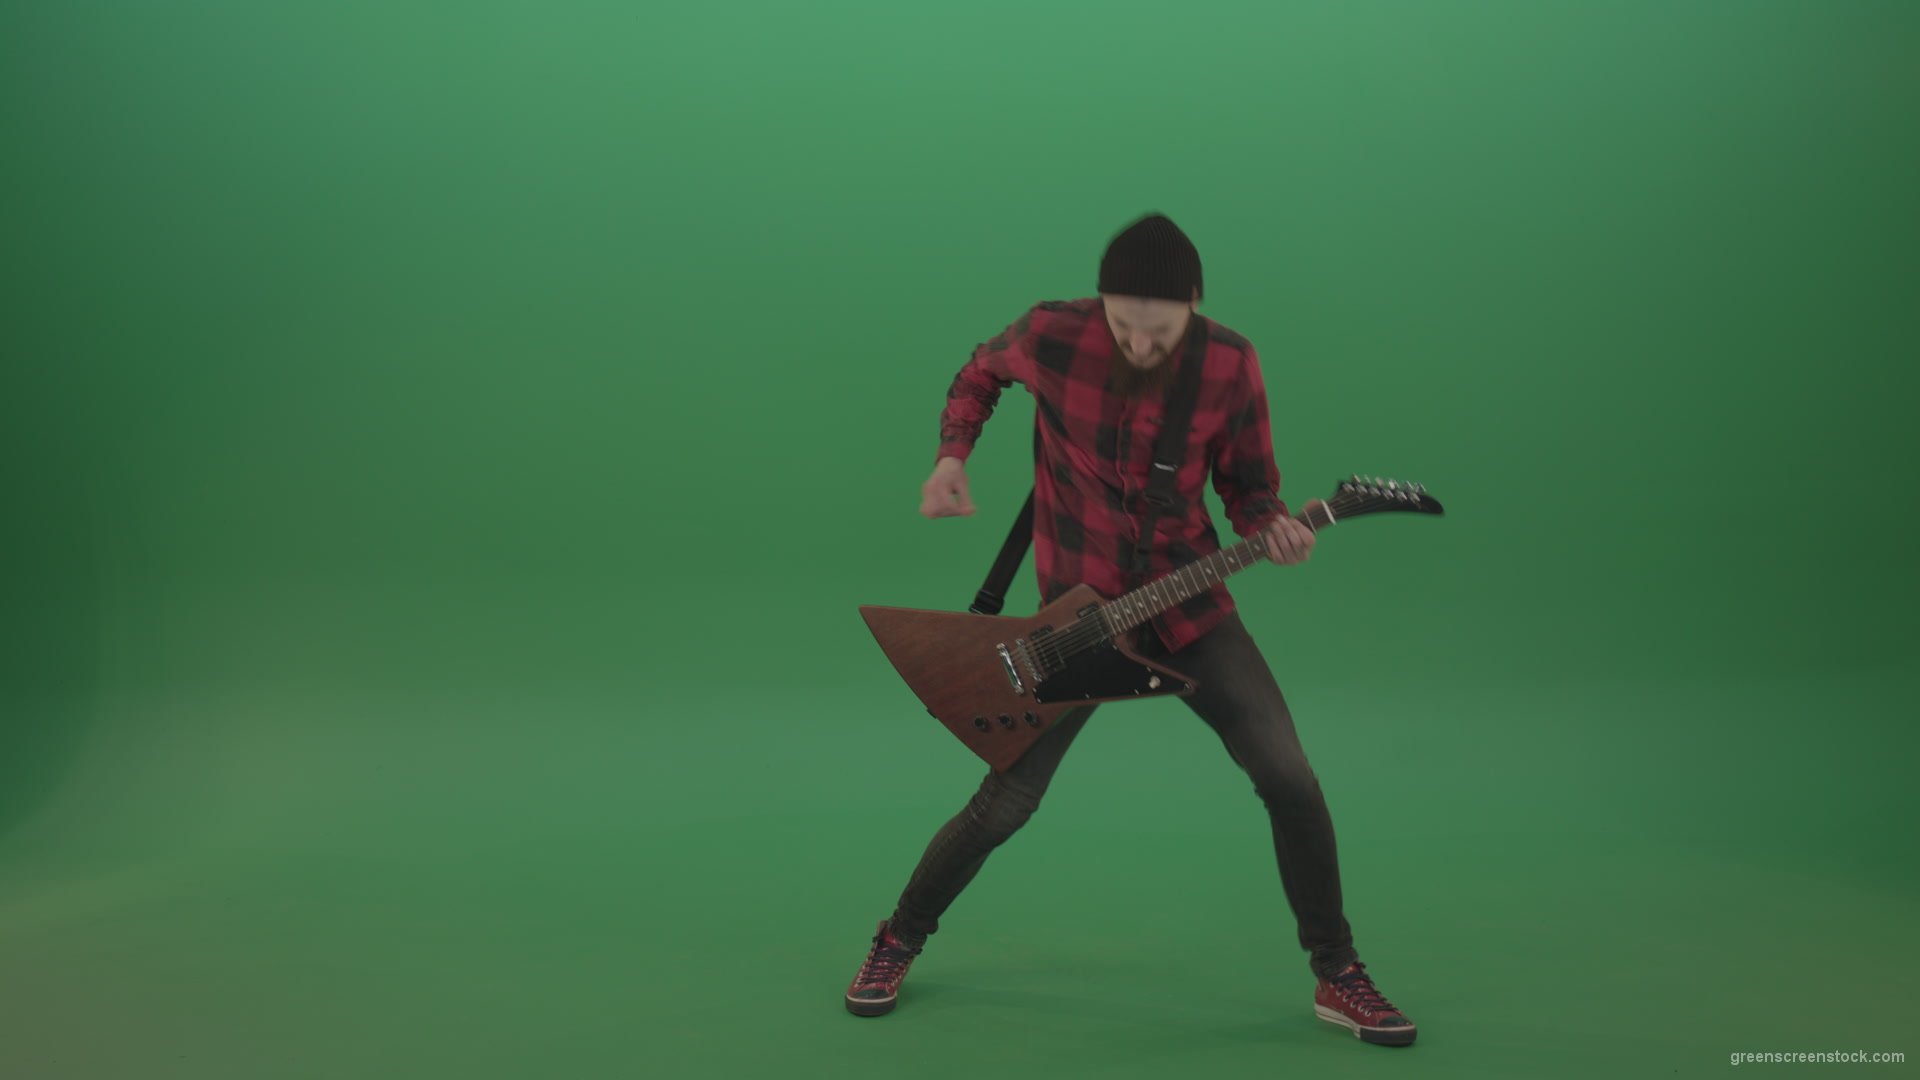 Full-size-Green-Screen-Musician-Rock-Guitarist-man-in-red-shirt-play-guitar-on-green-screen_007 Green Screen Stock